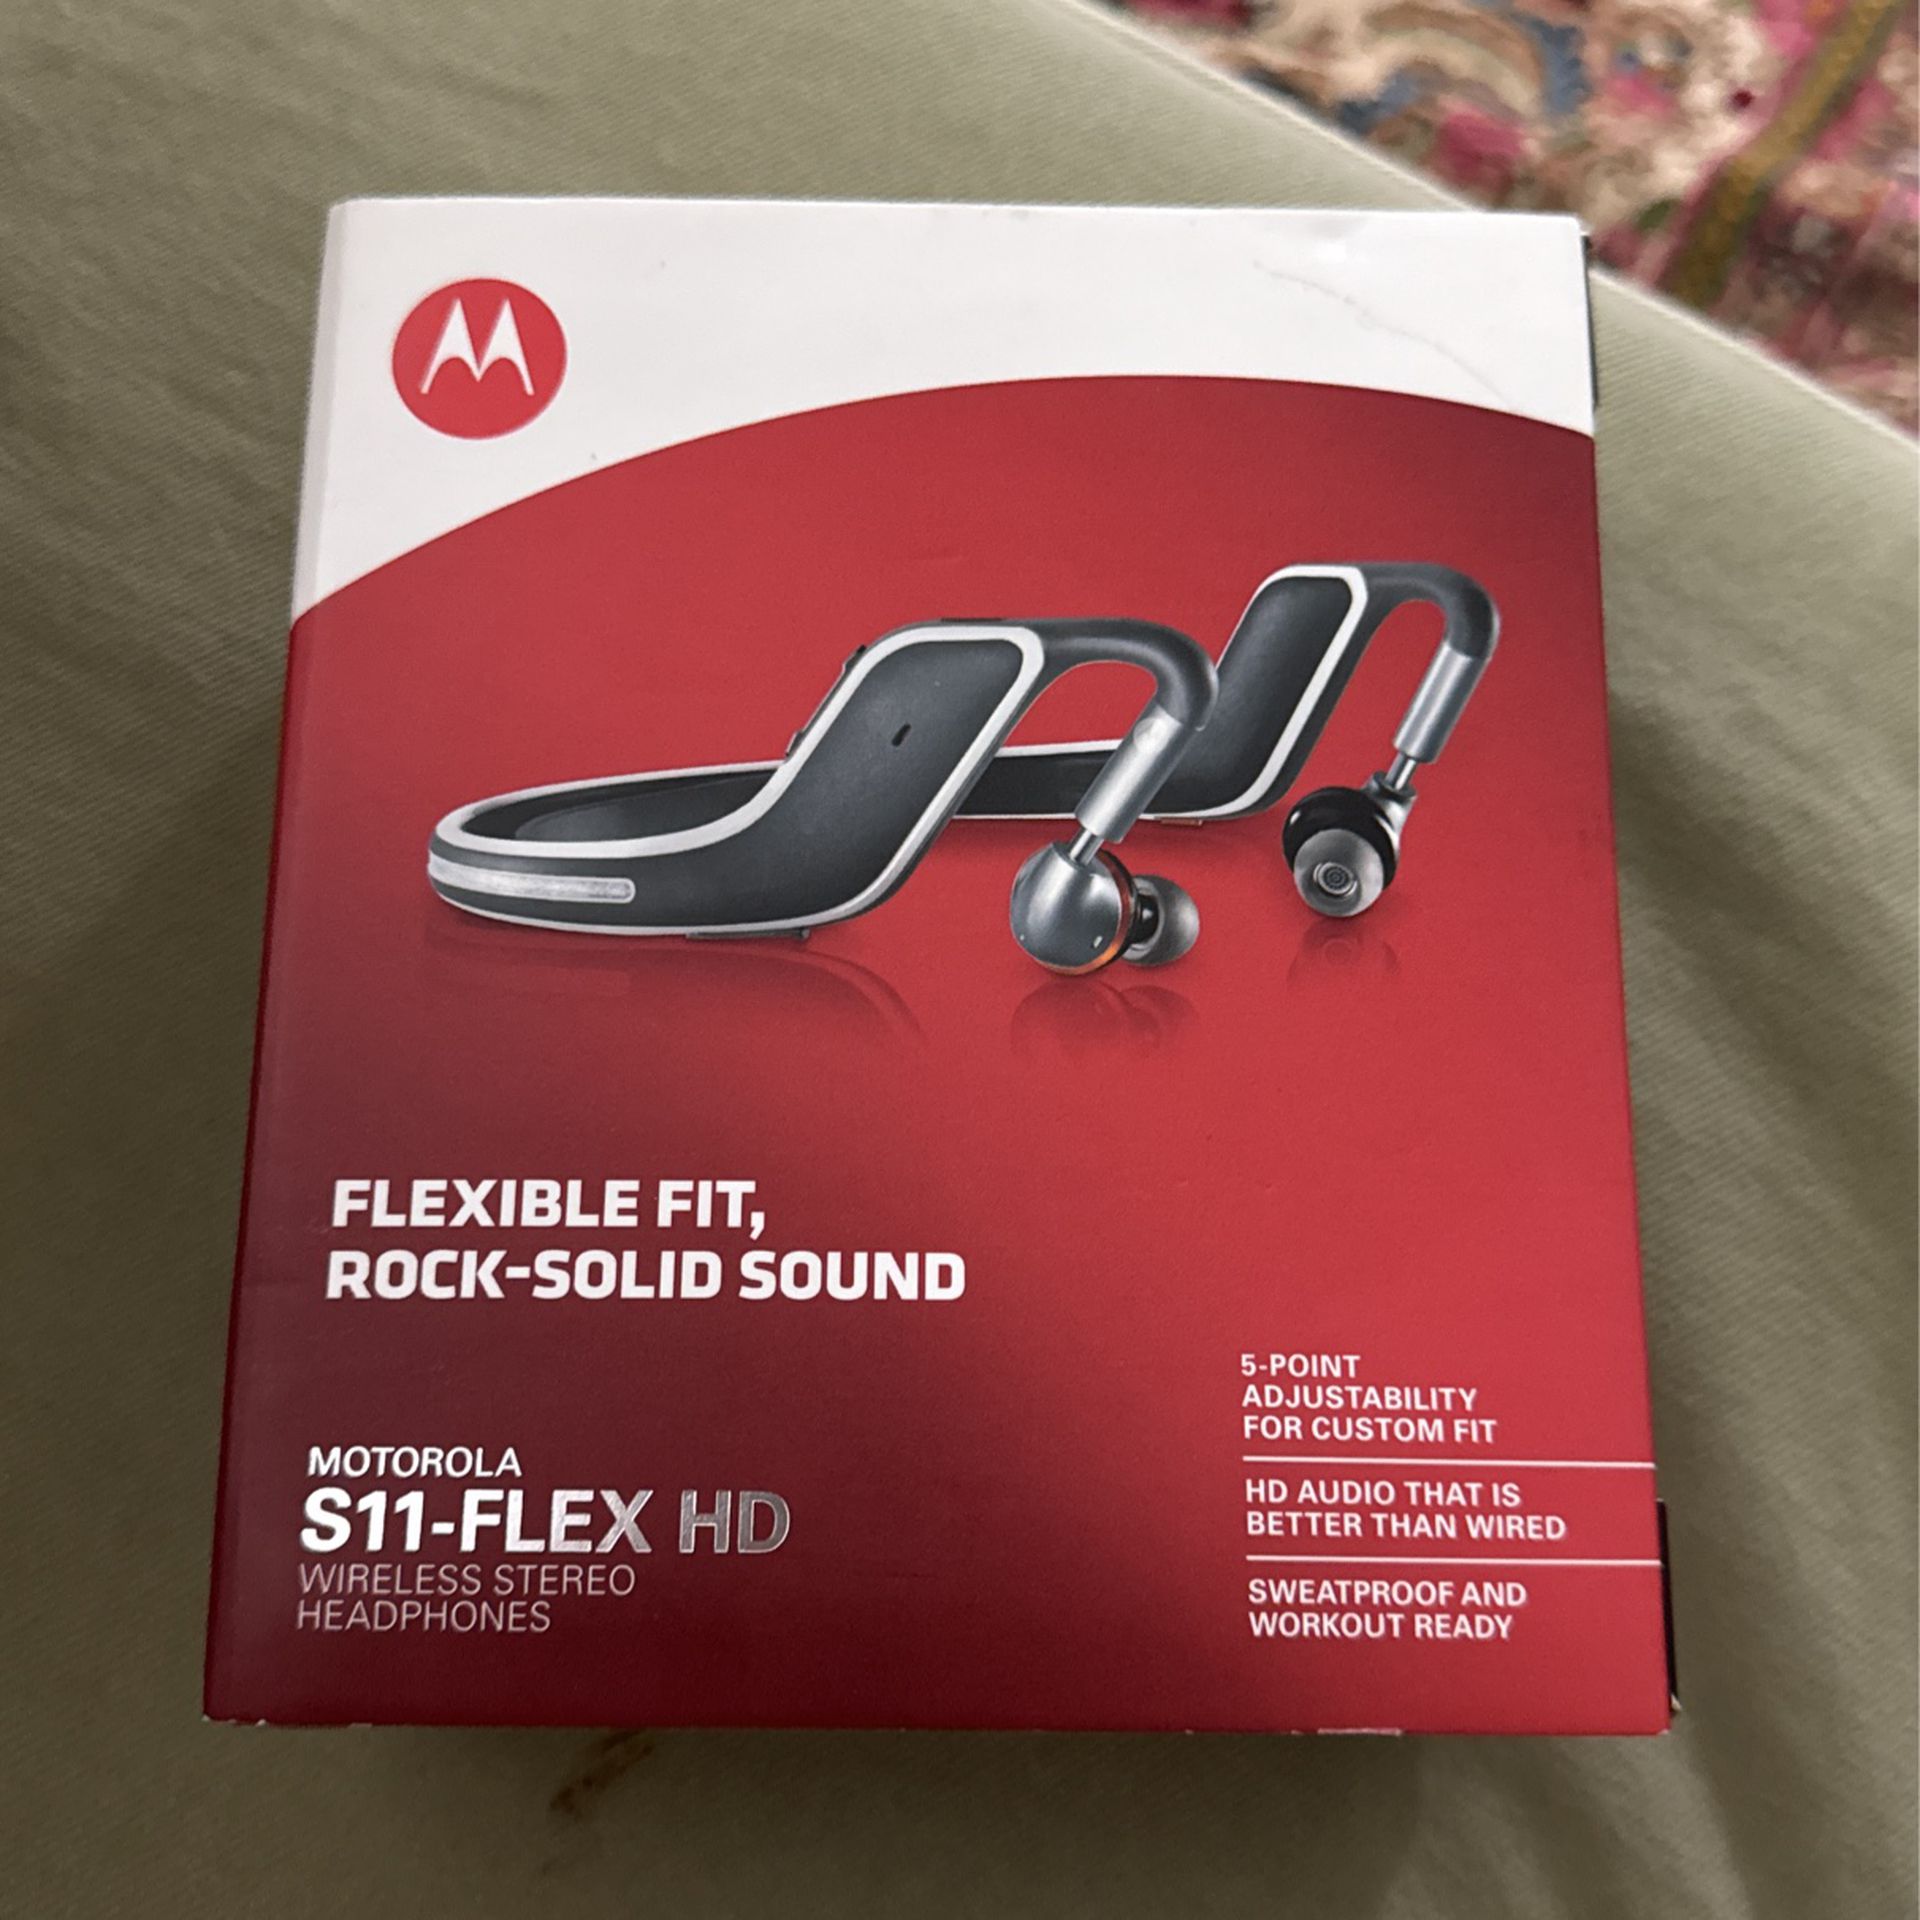 Motorola s11-flex hd wireless headphones 